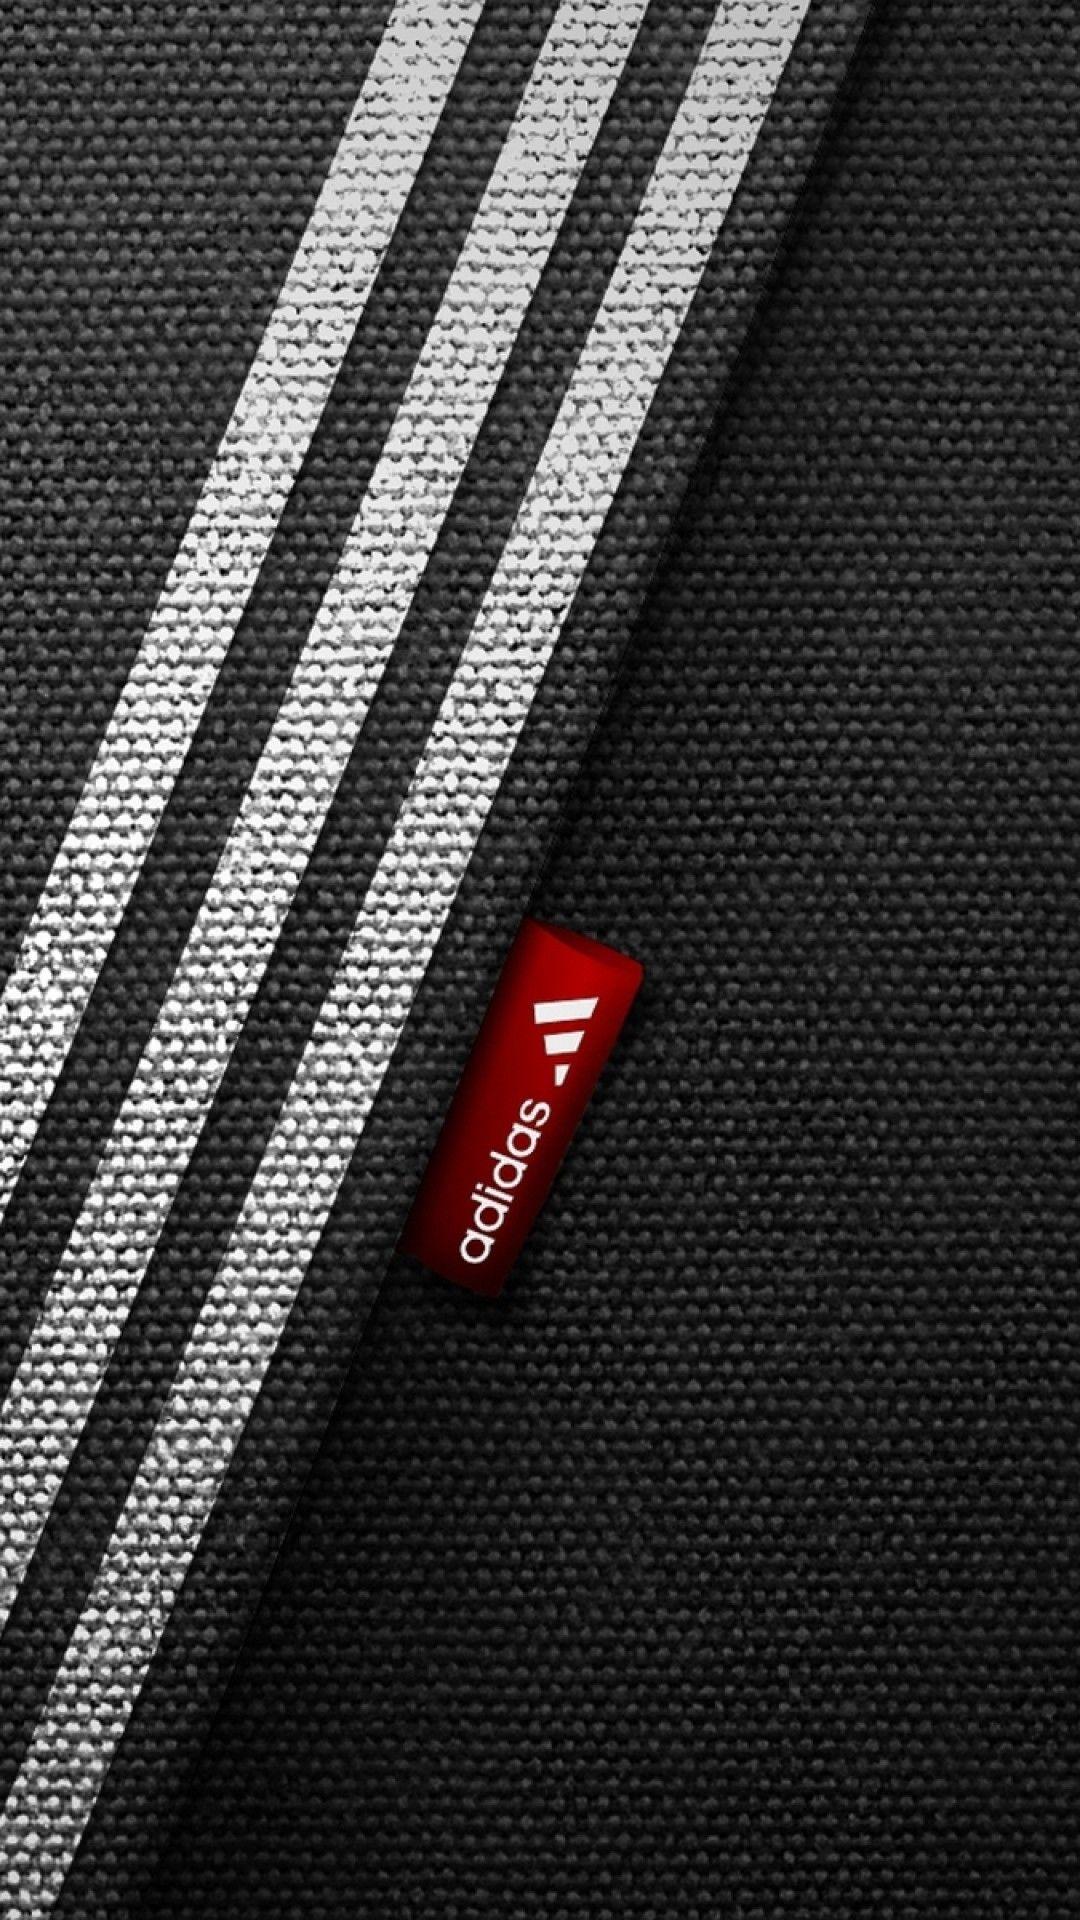 Adidas Wallpaperbest Adidas Wallpaper 1080x1920 For 4k PIC